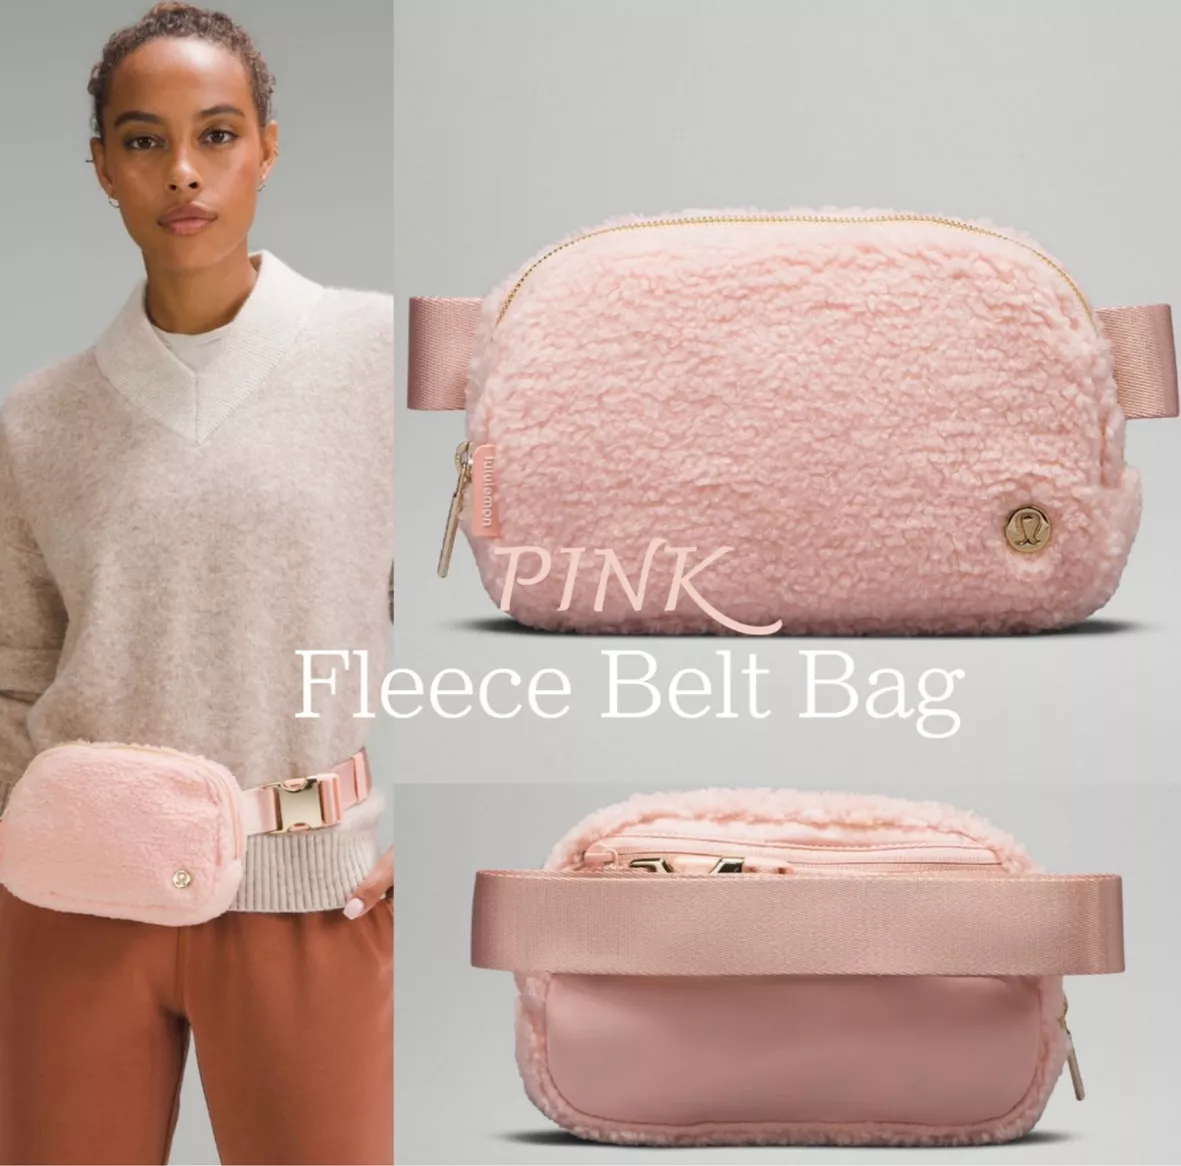 Everywhere Belt Bag 1L *Fleece curated on LTK